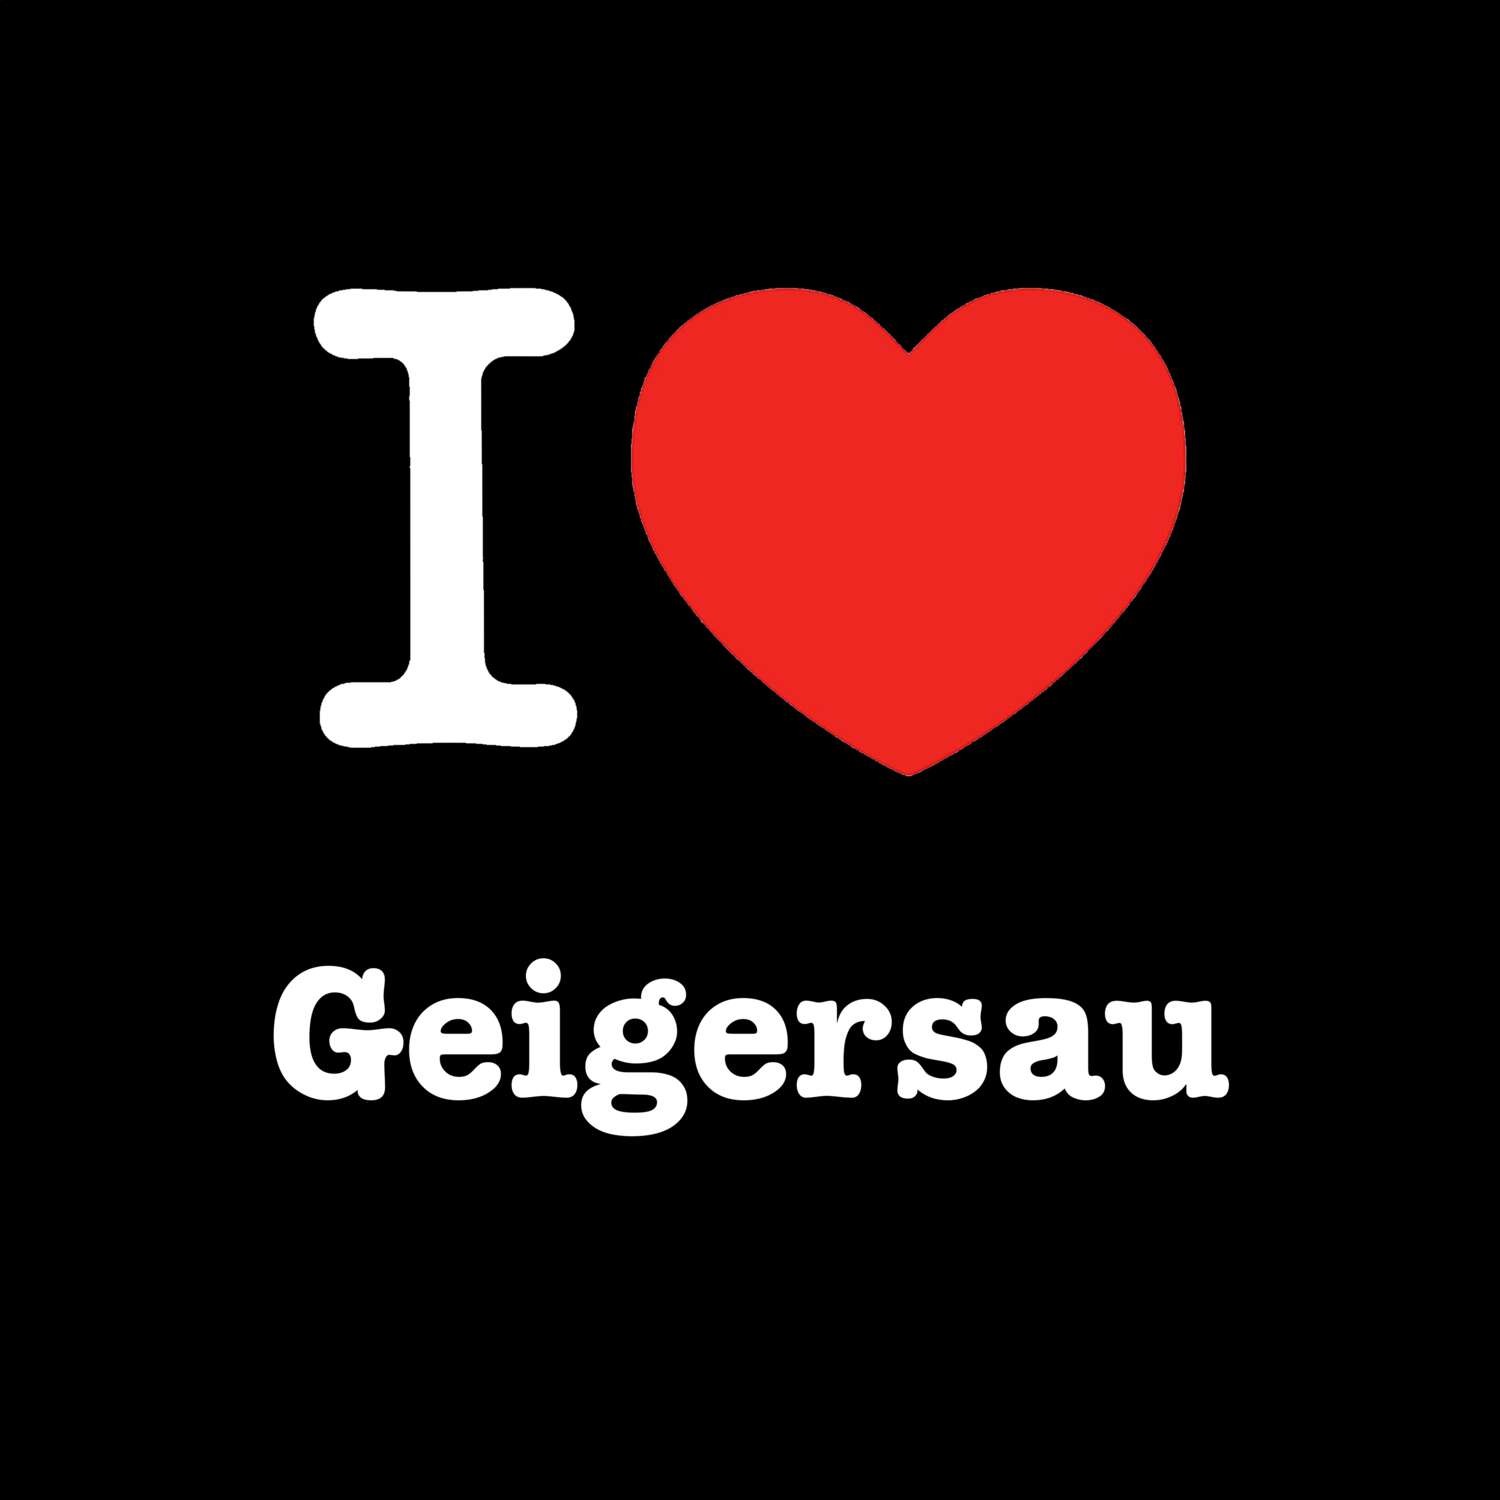 Geigersau T-Shirt »I love«